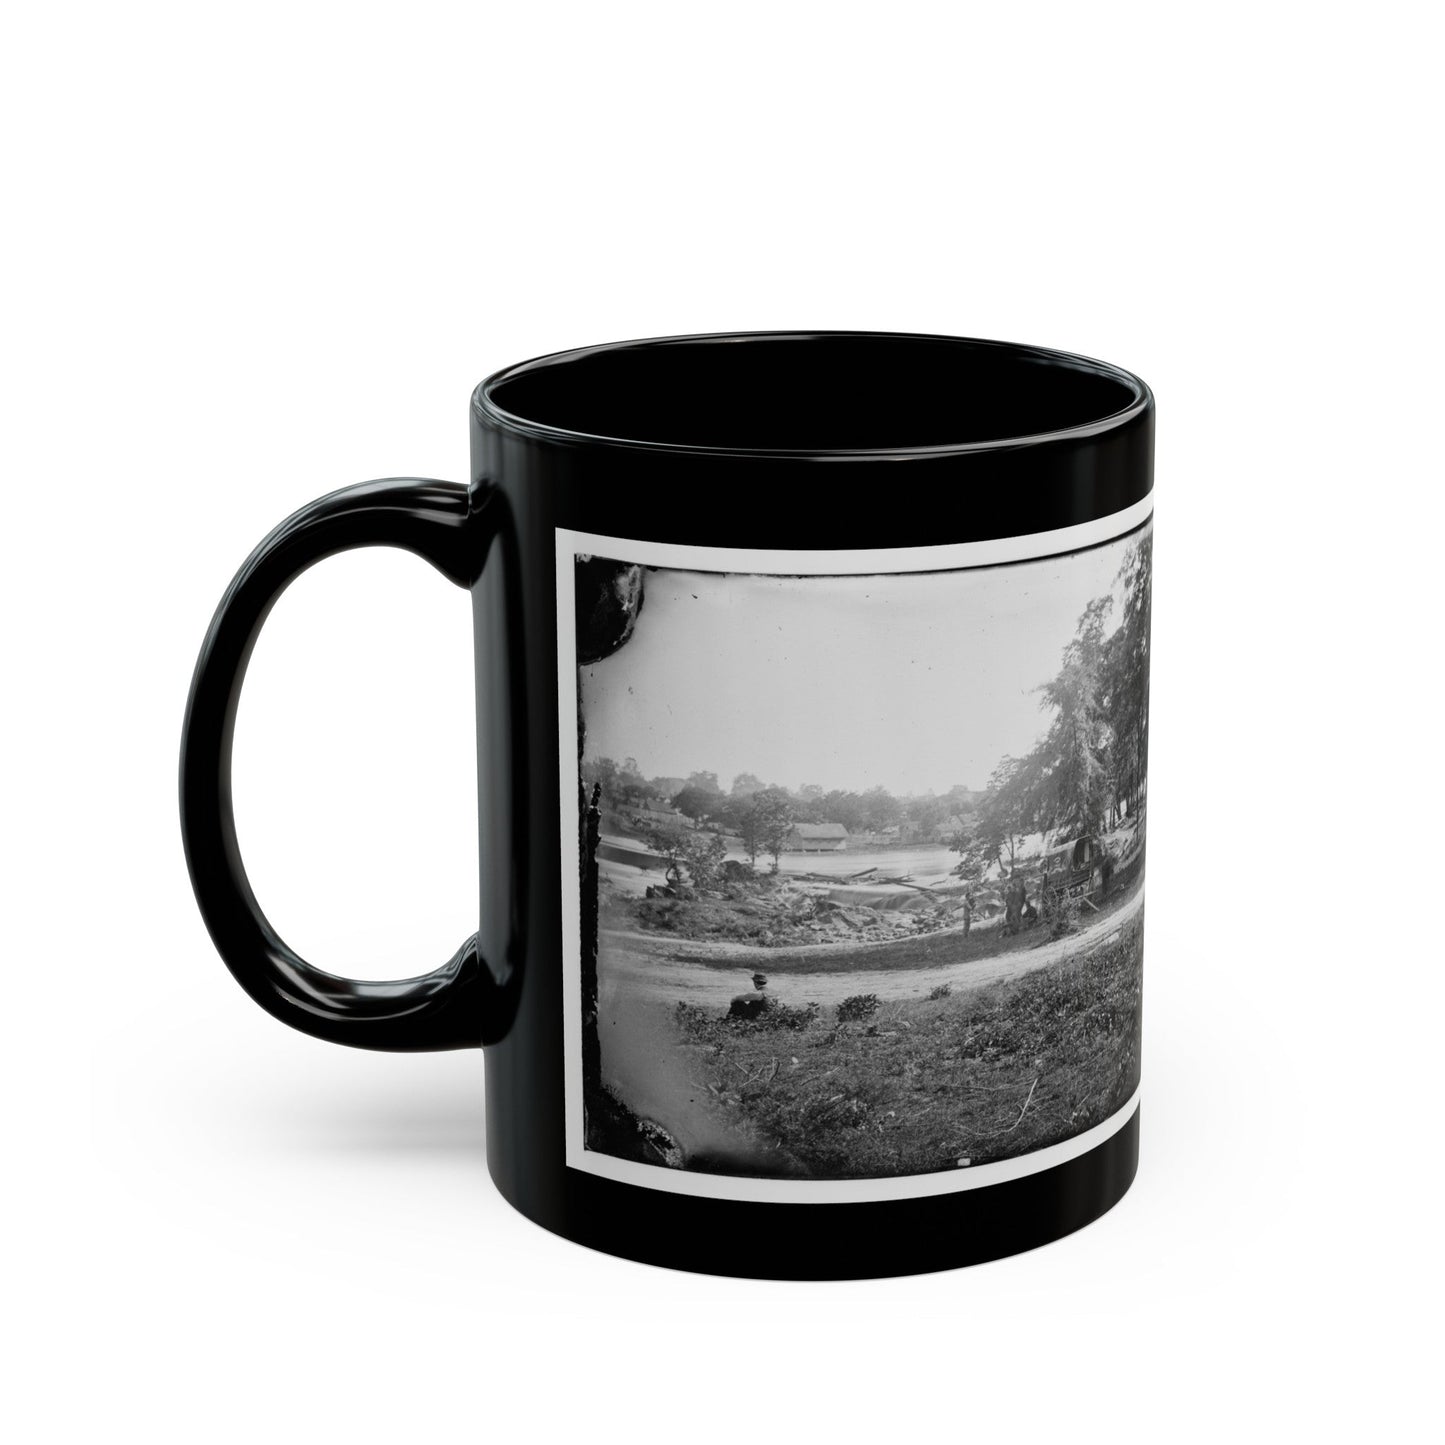 Petersburg, Virginia (Vicinity). View Of James River And Photographic Wagon Of Engineer Corps (U.S. Civil War) Black Coffee Mug